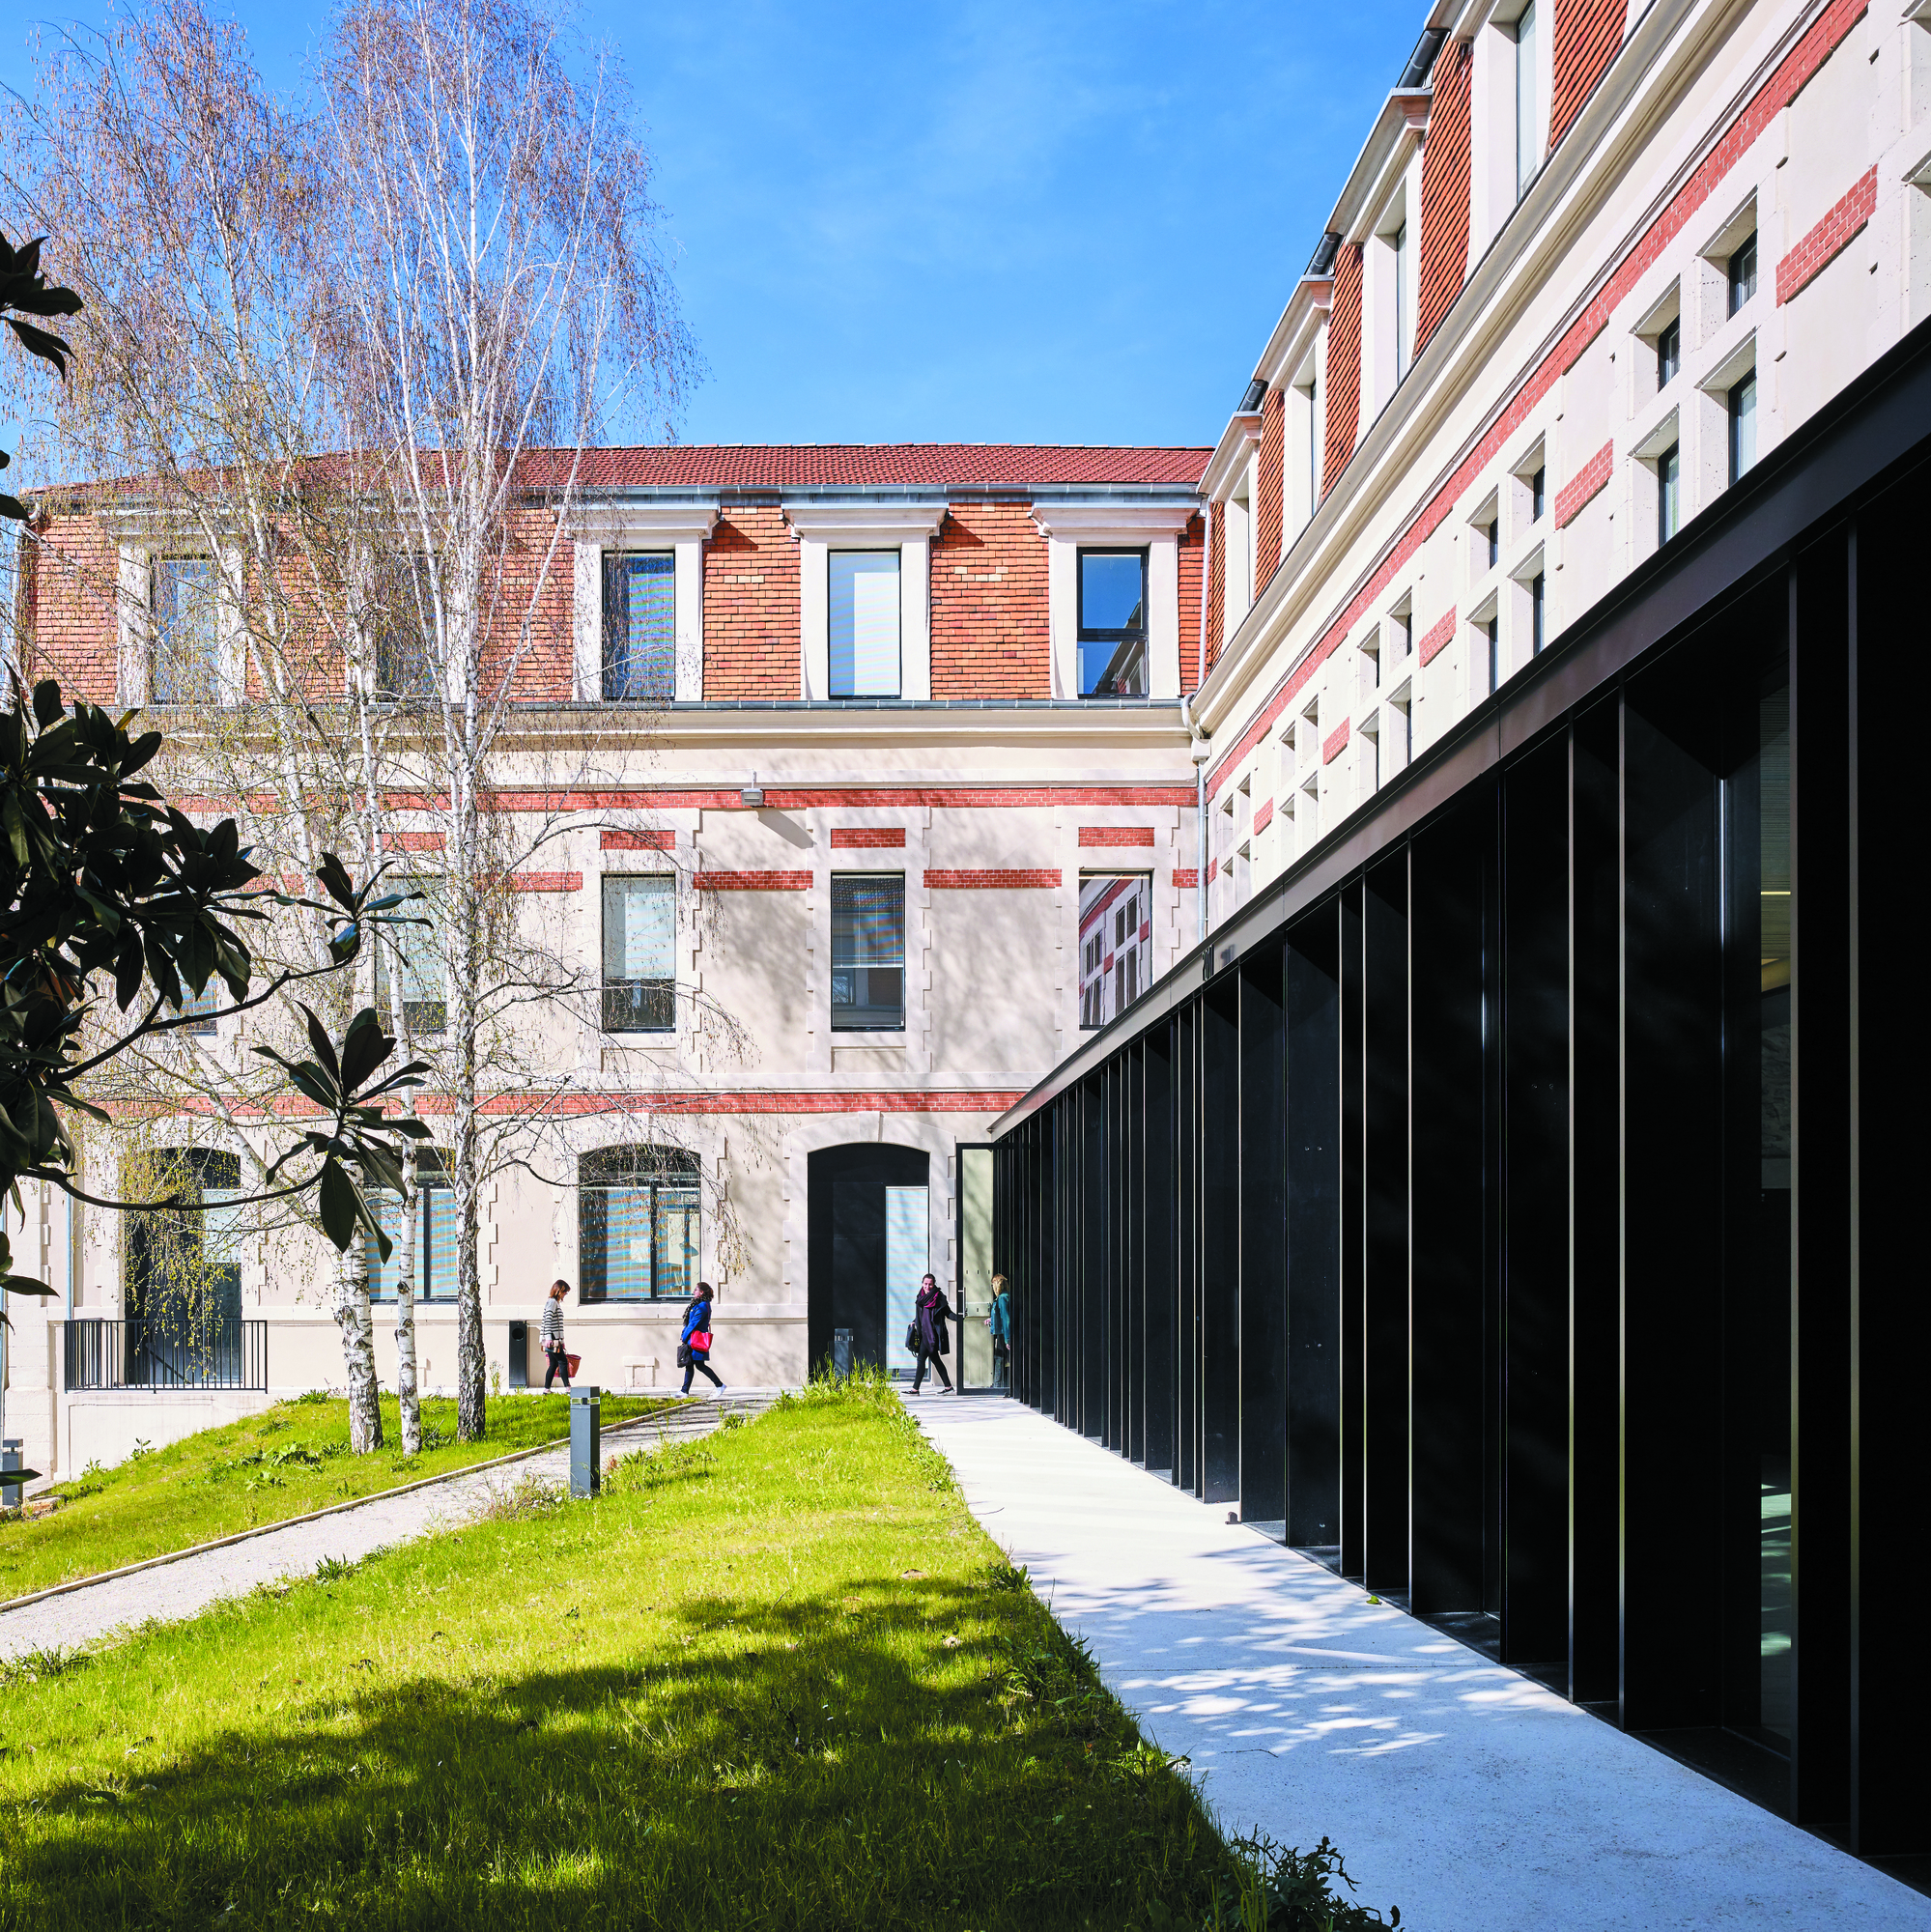 University Centre, Cahors, France - Image 4